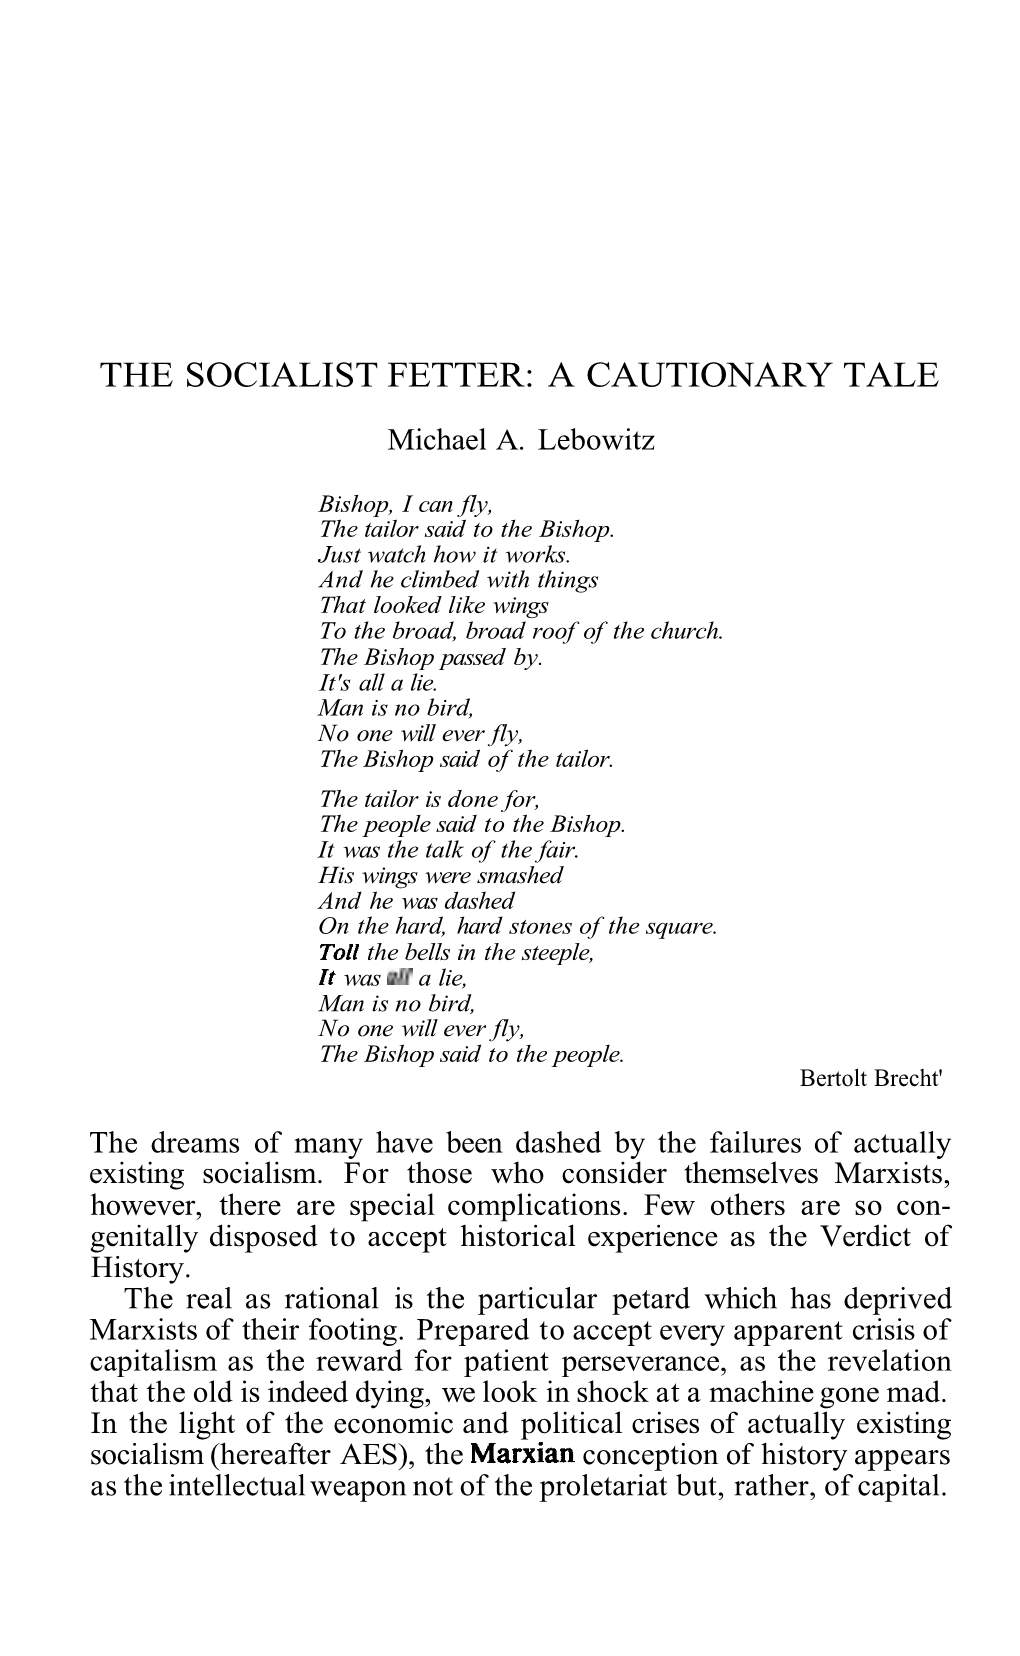 The Socialist Fetter: a Cautionary Tale